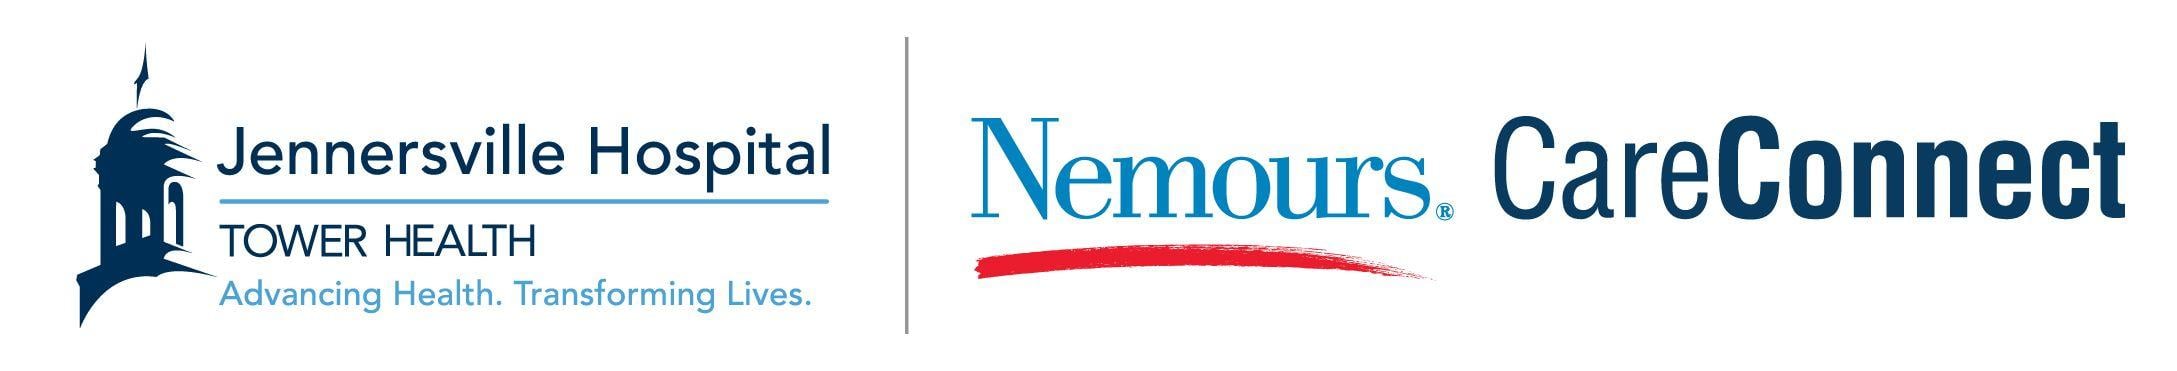 Nemours Logo - Nemours CareConnect. Jennersville Hospital. West Grove, PA